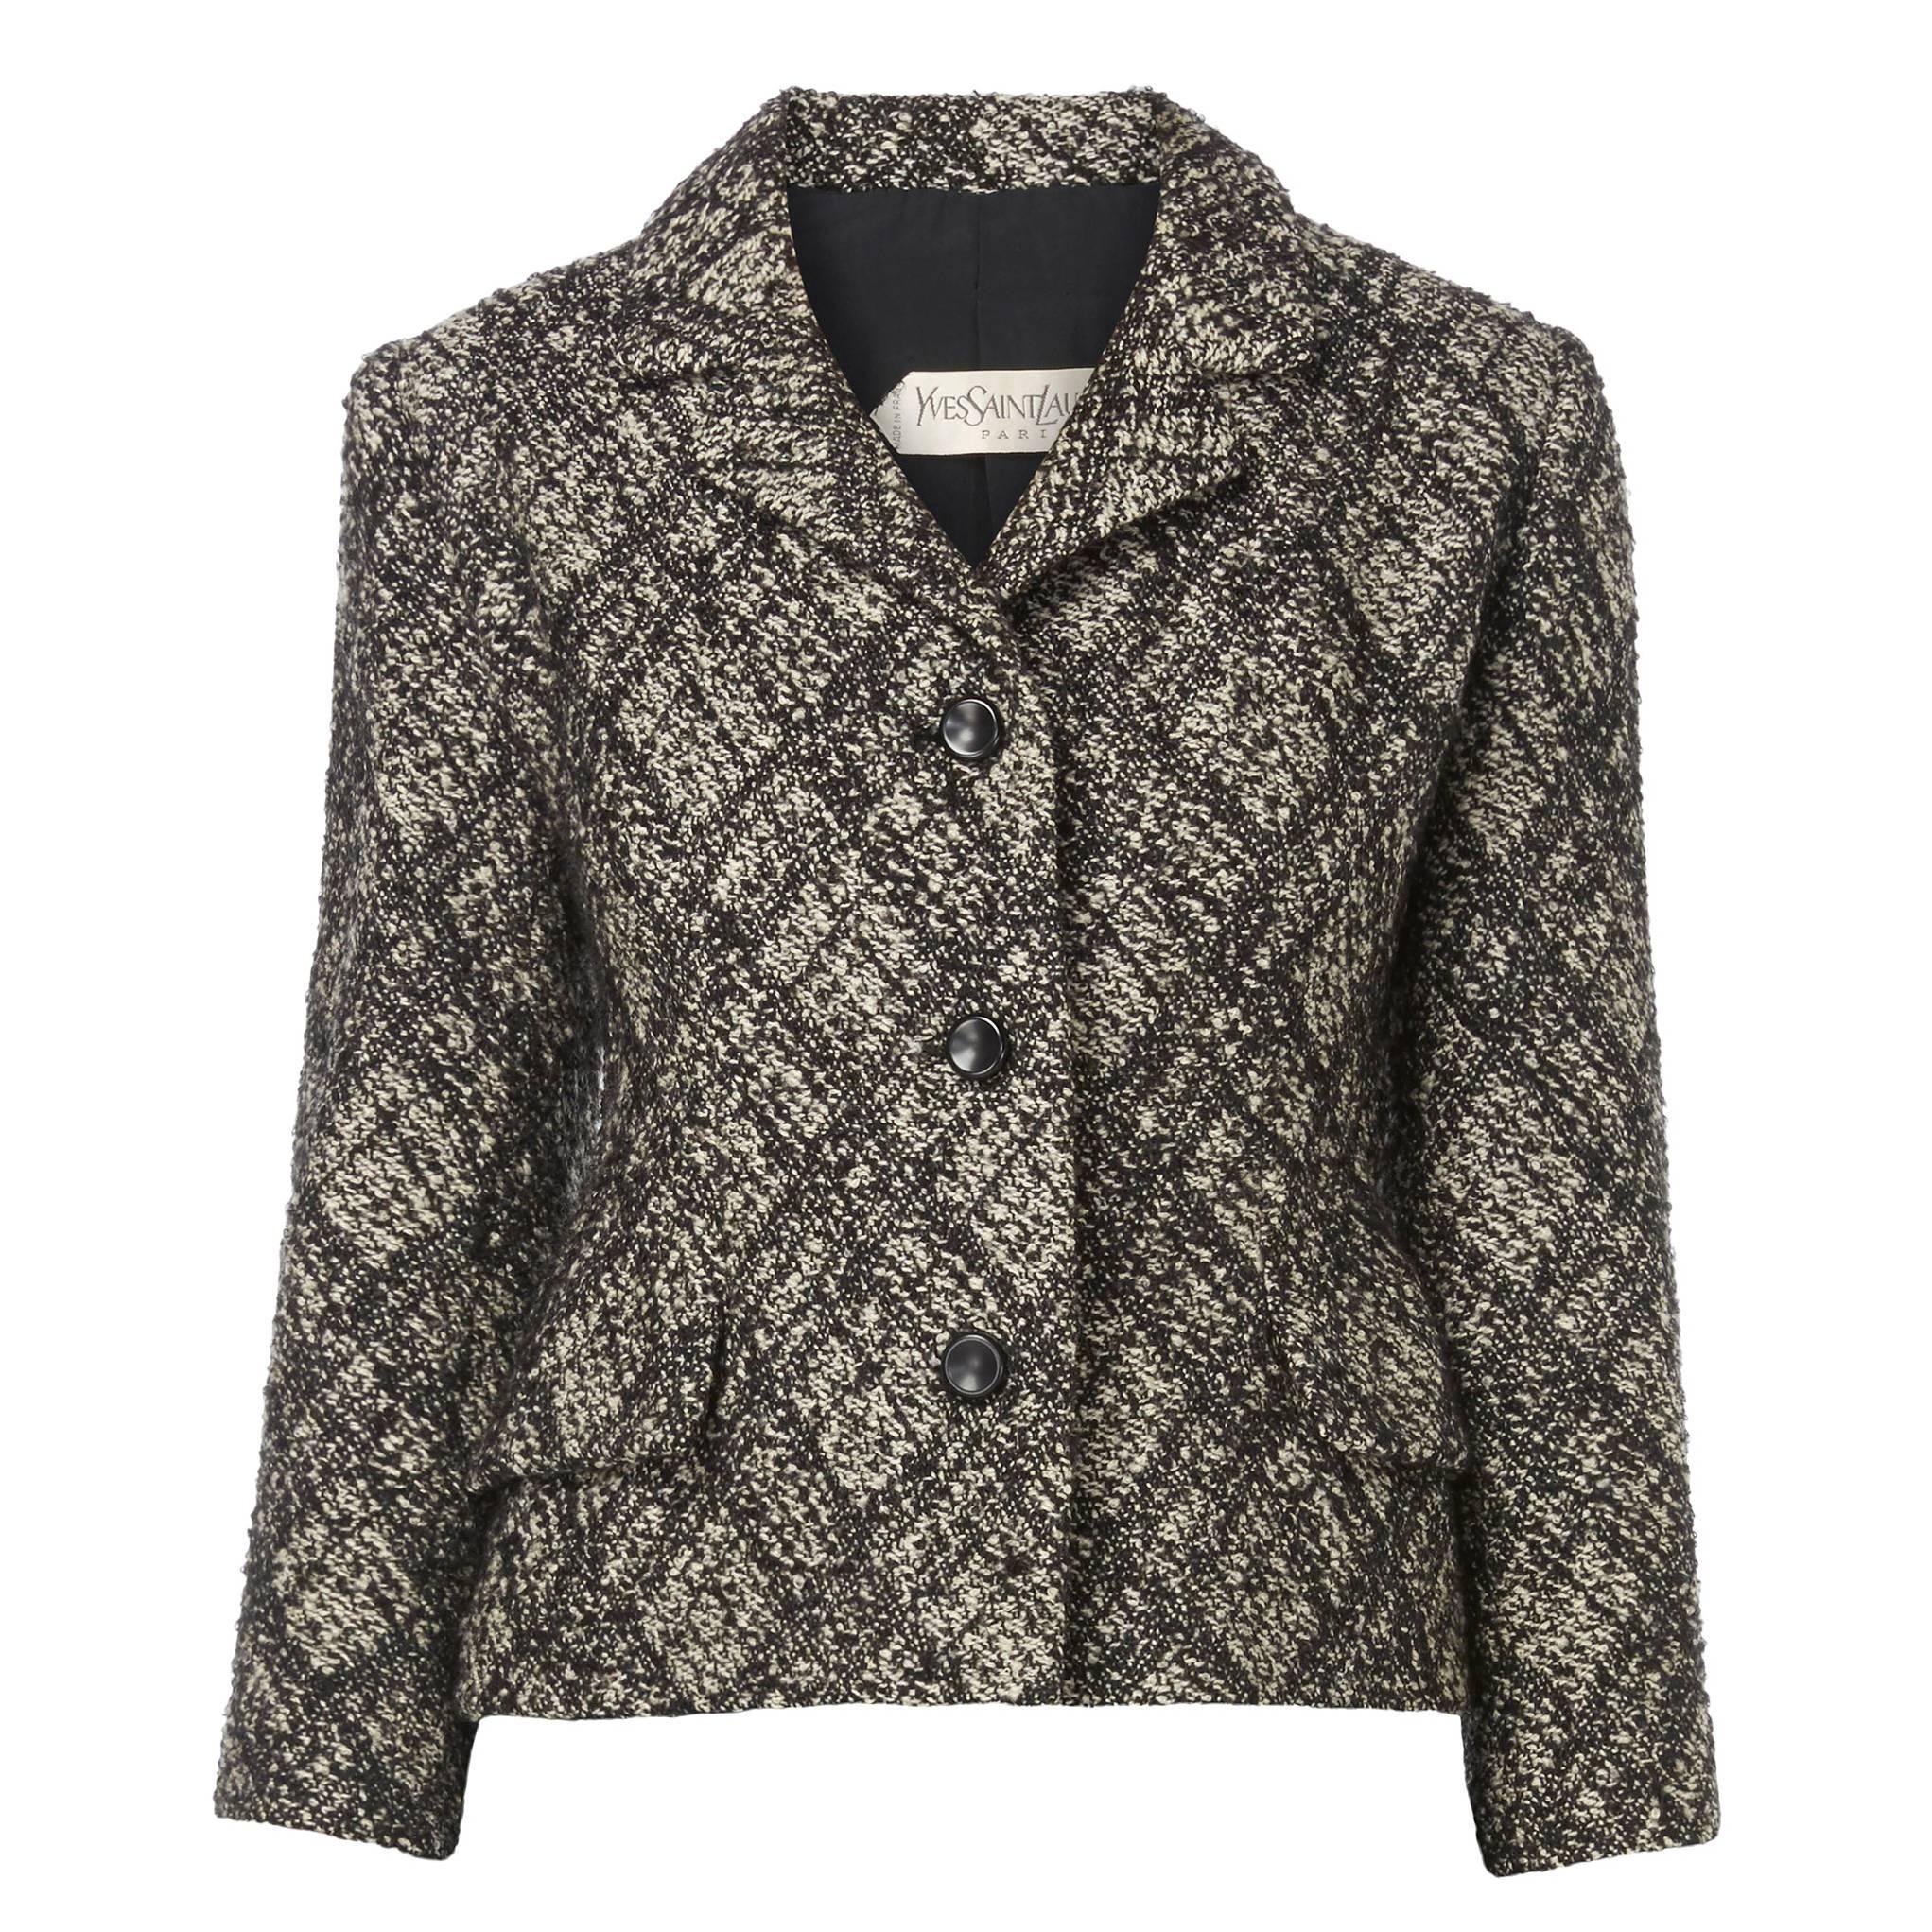 Yves Saint Laurent haute couture grey tartan jacket, circa 1964